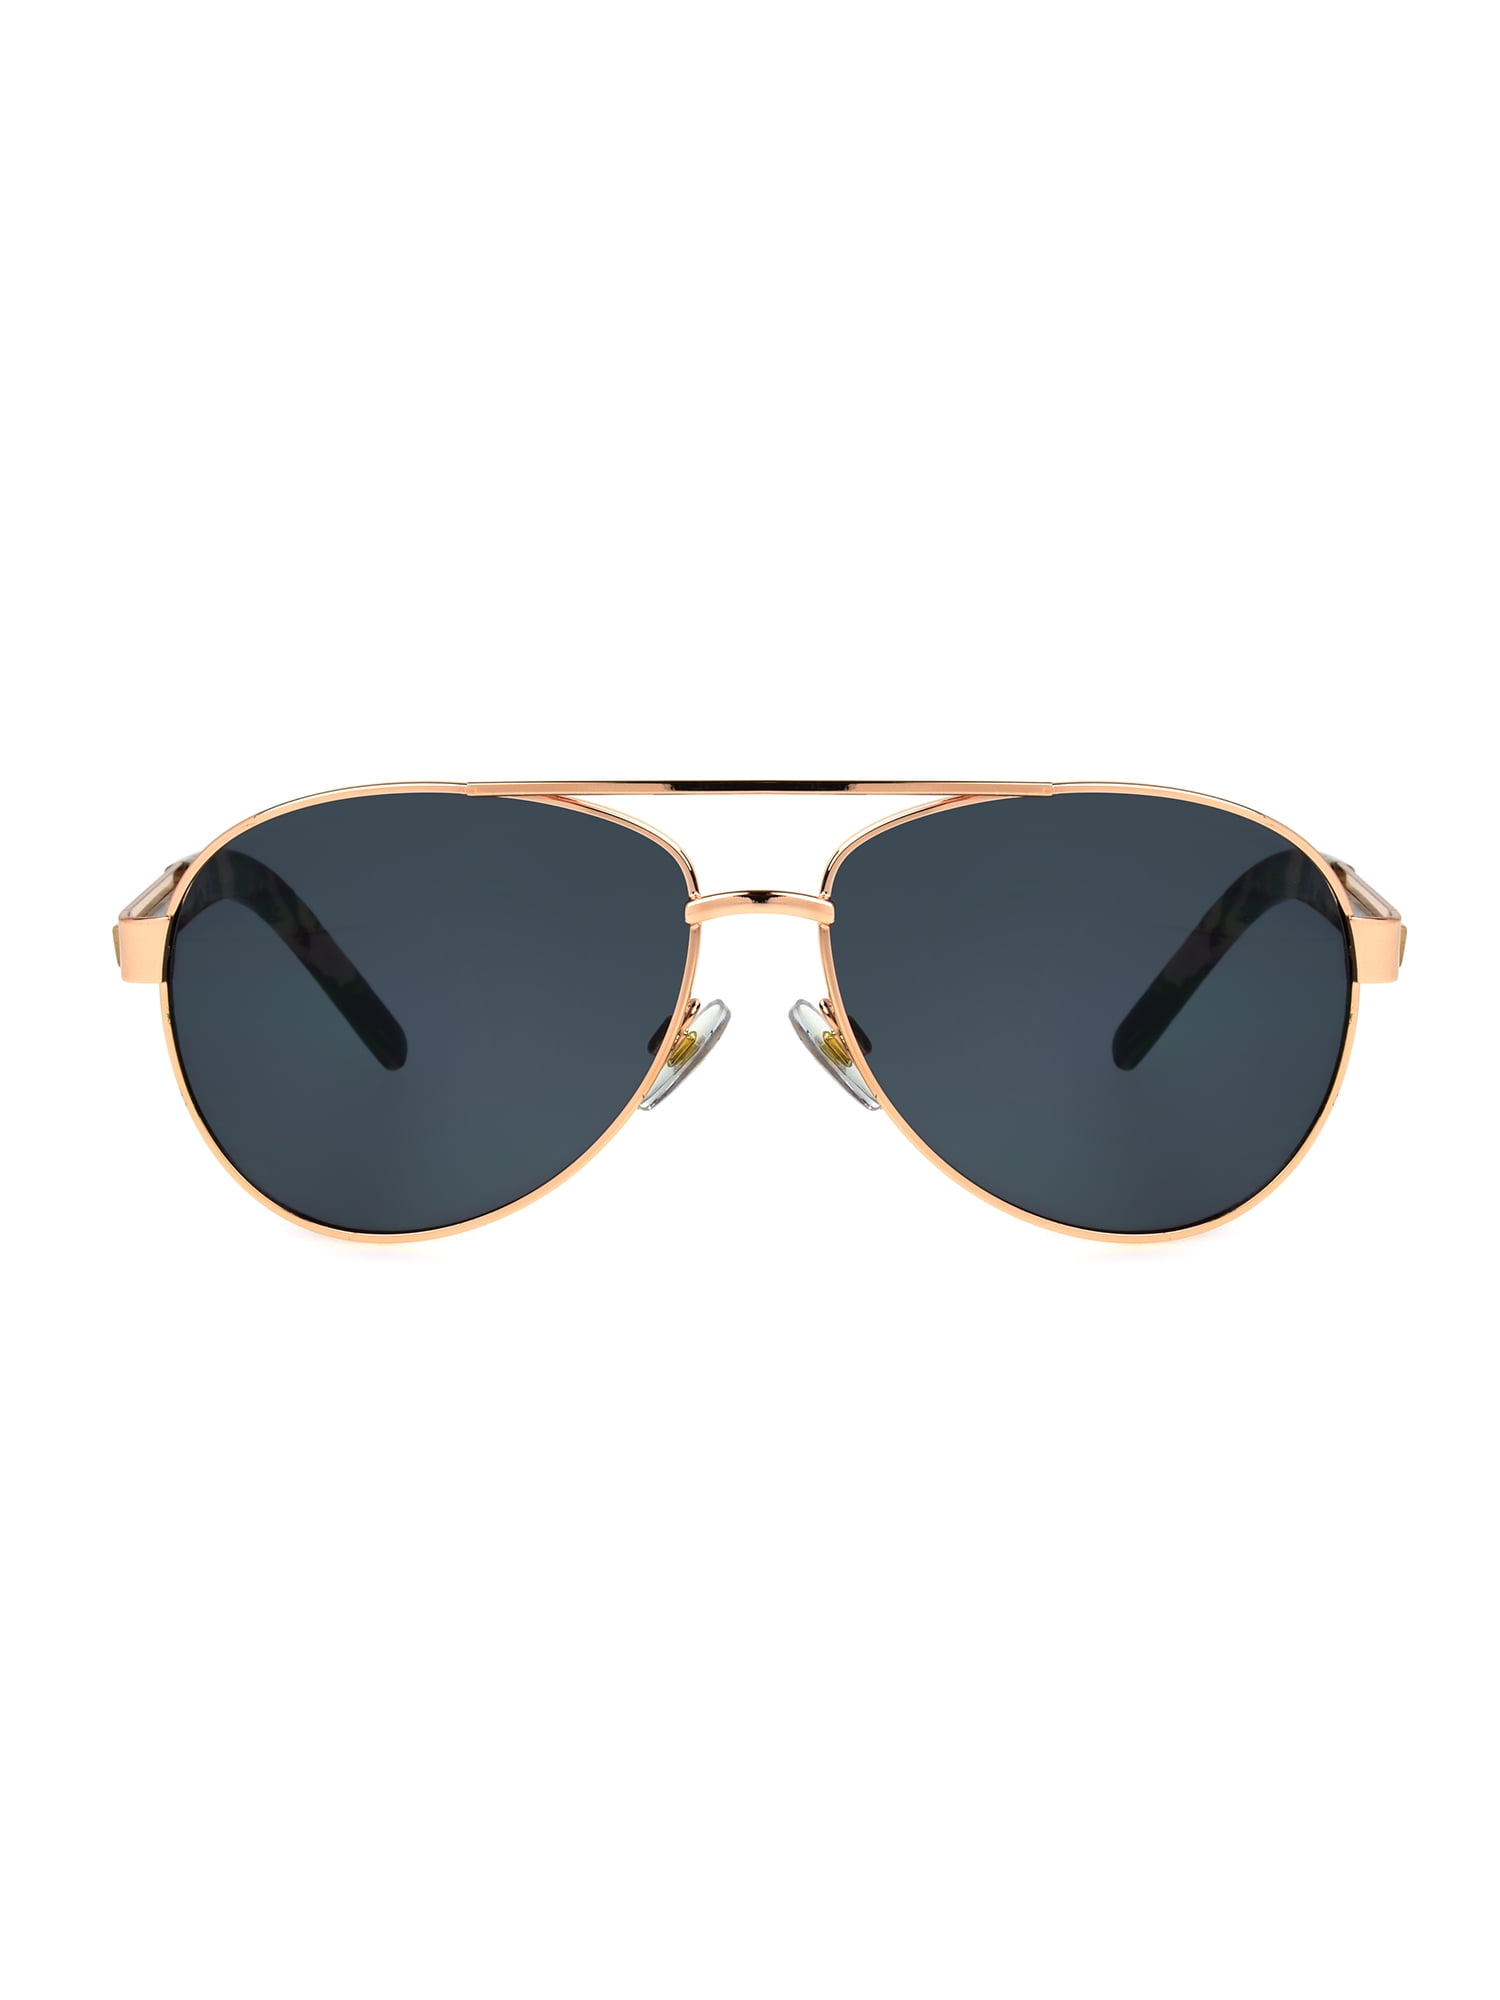 Hot Rose Gold  Frame Sunglasses  Mirror Lens Fashion  UV400 UVB lady girl UK 